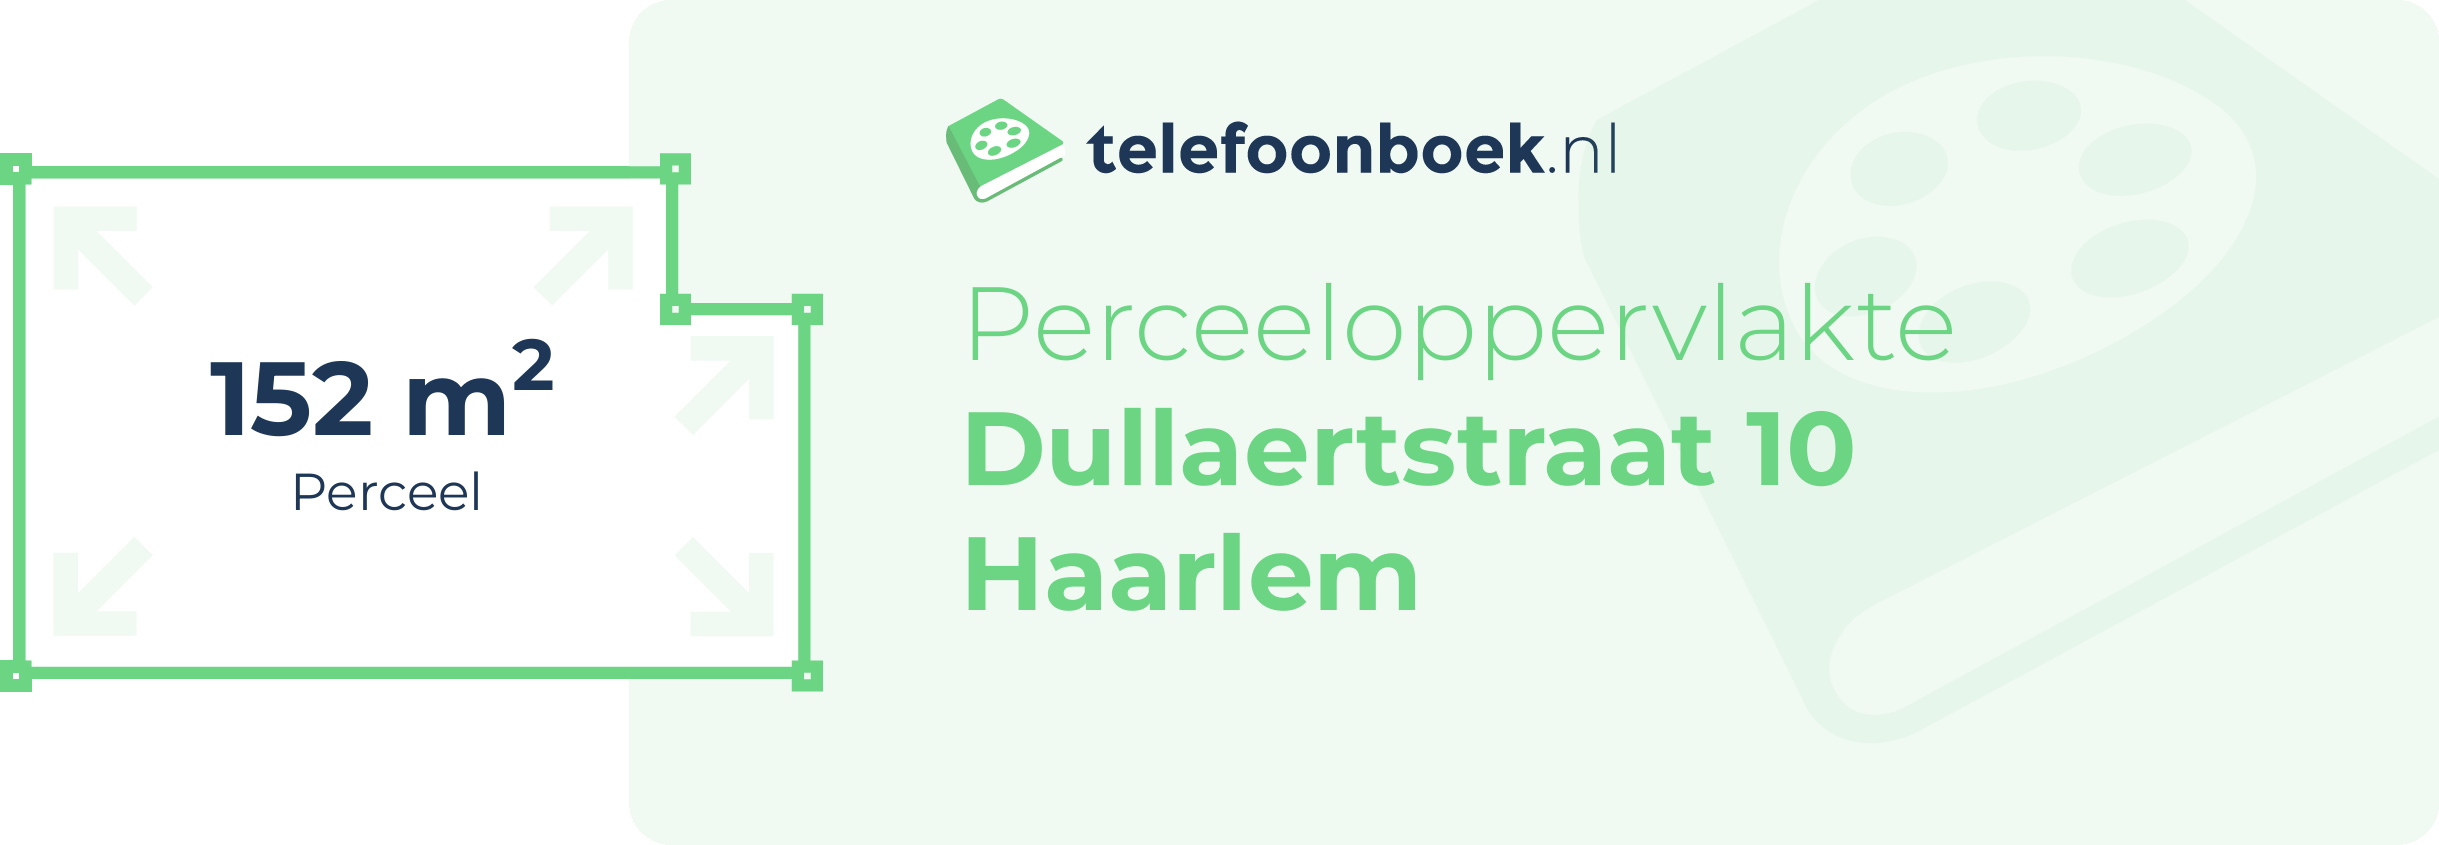 Perceeloppervlakte Dullaertstraat 10 Haarlem